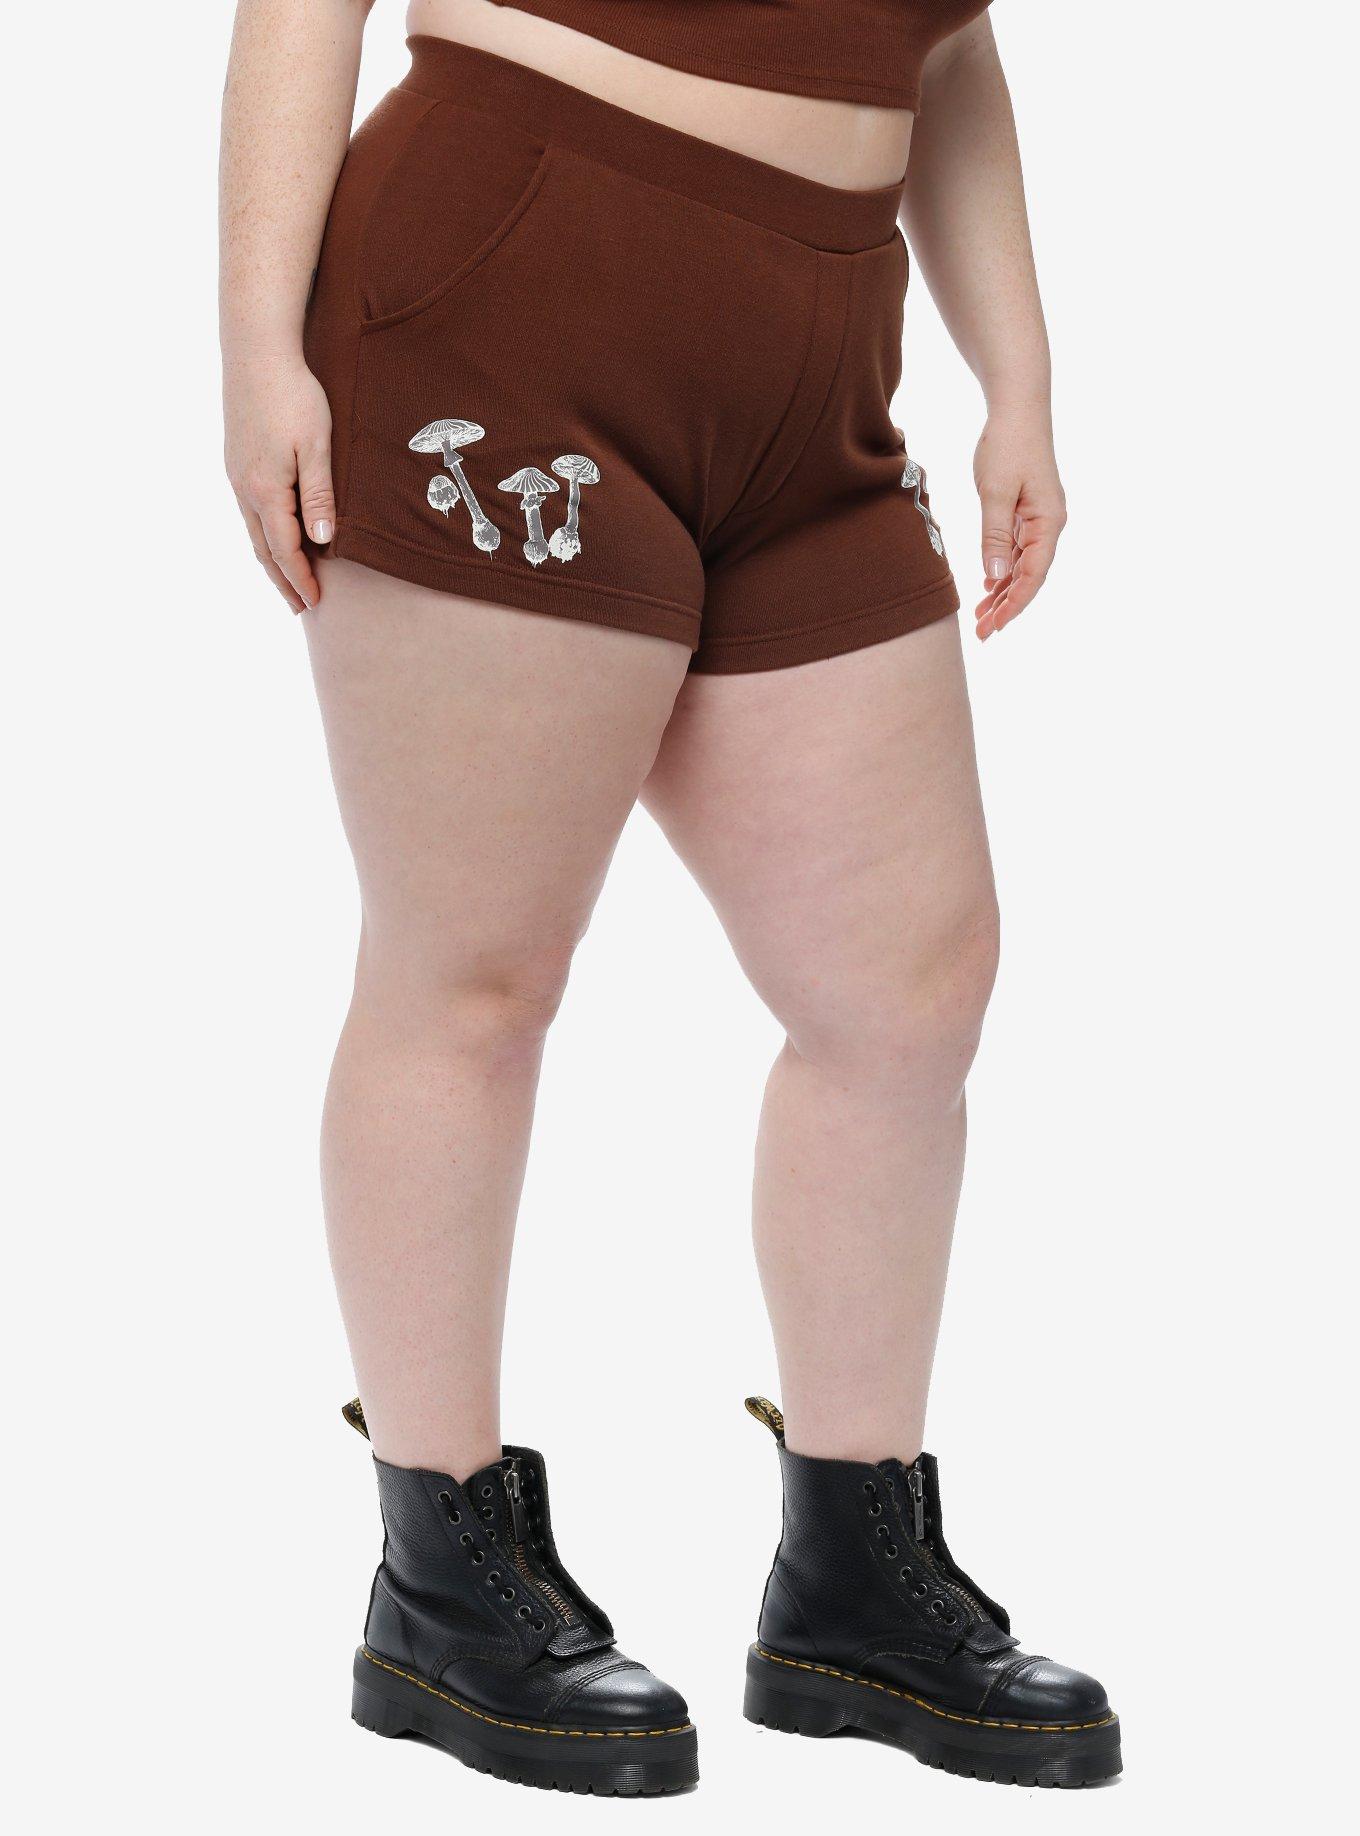 Sunfaded Haze Mushroom Girls Lounge Shorts Plus Size, BROWN, alternate